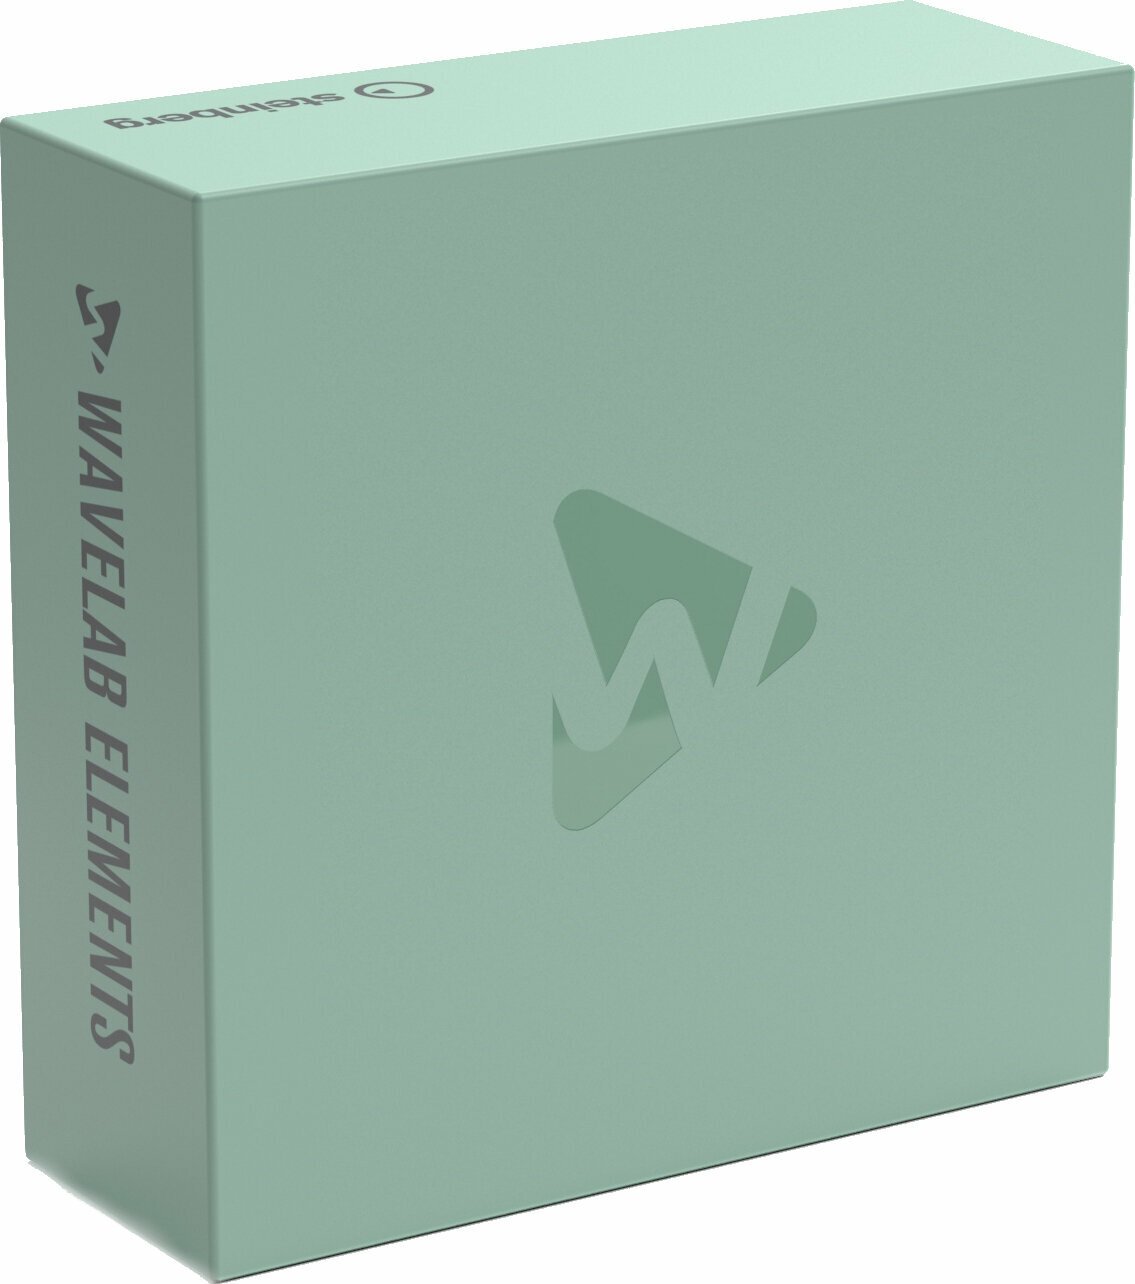 Mastering softver Steinberg Wavelab Elements 11